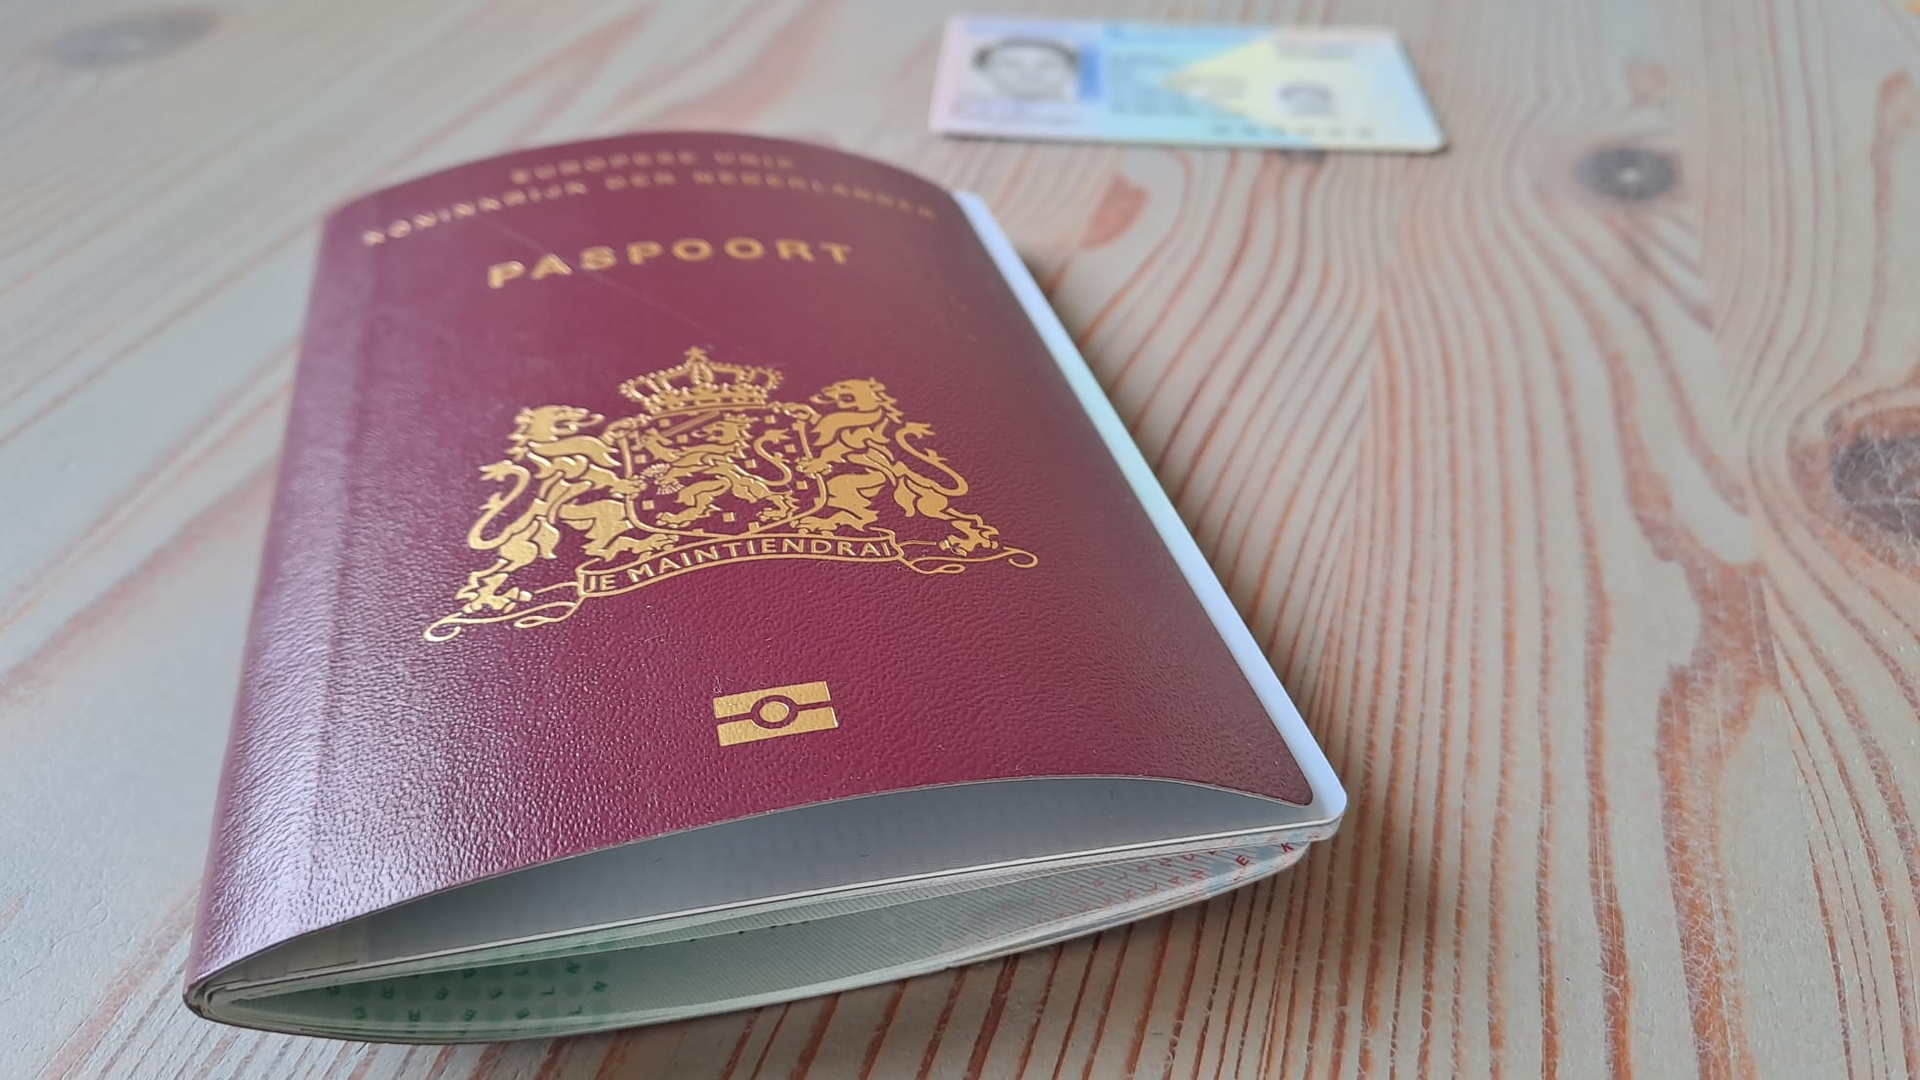 Nederlands paspoort